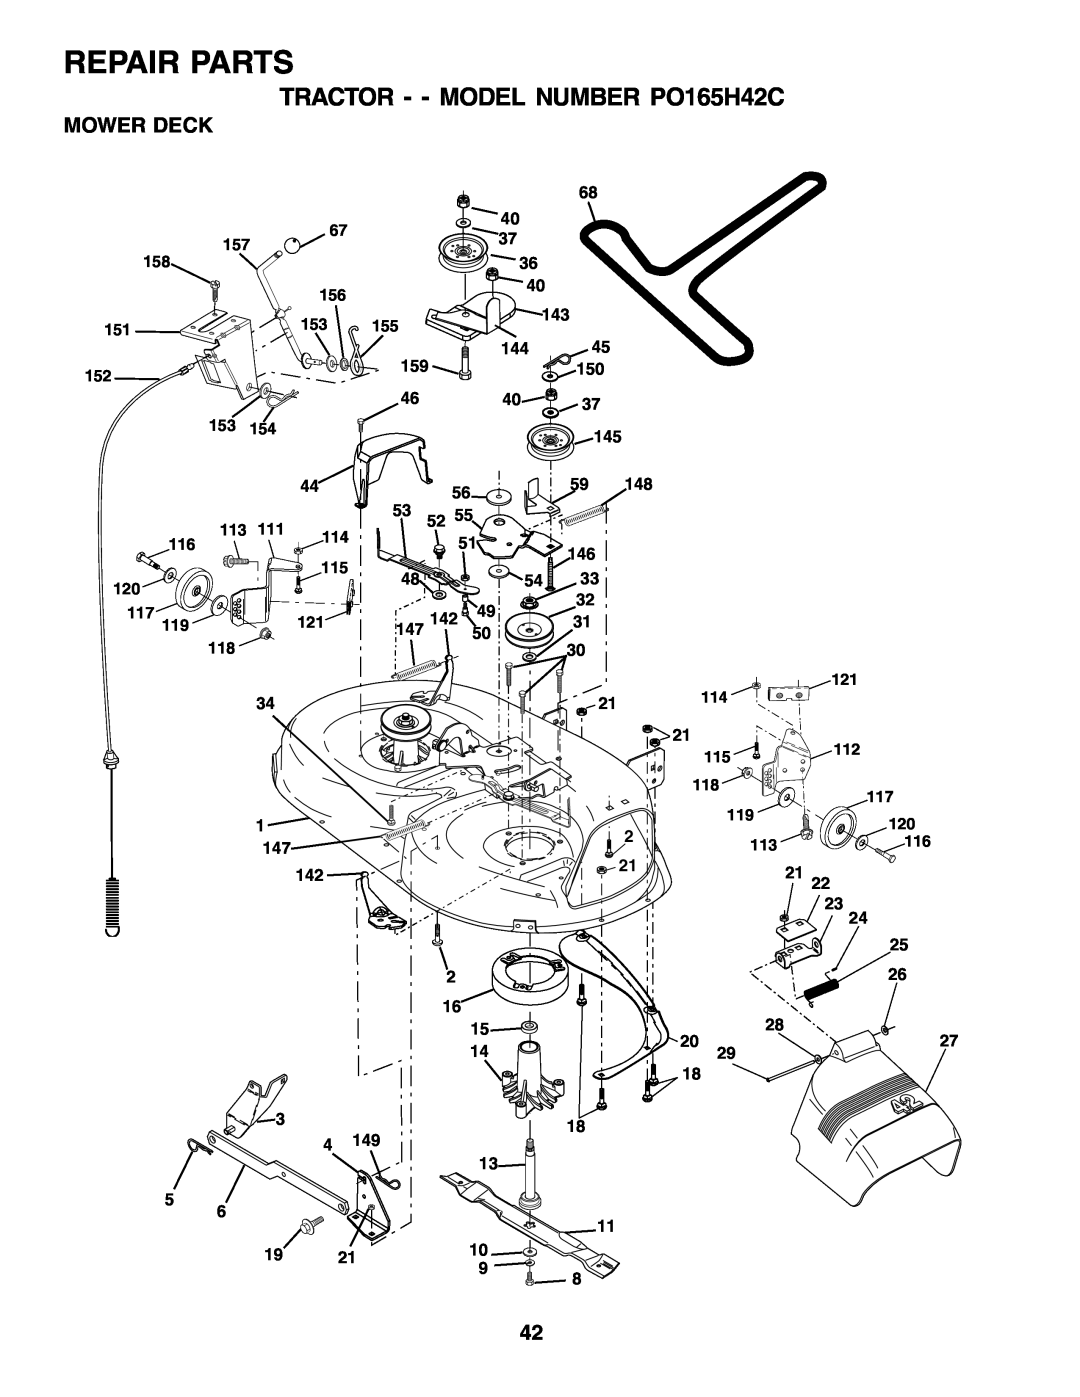 Poulan 178379 owner manual Mower Deck, 21114, Repair Parts, TRACTOR - - MODEL NUMBER PO165H42C 